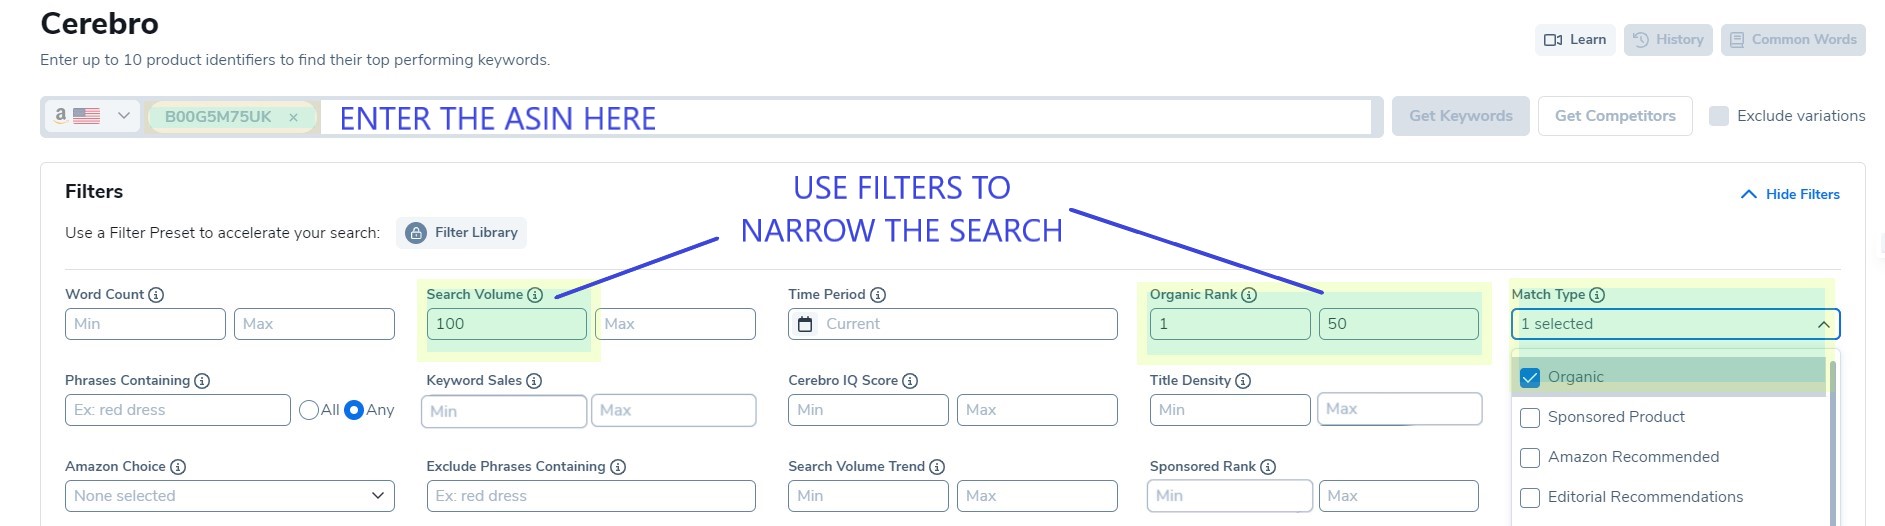 search optimization on amazon using filters